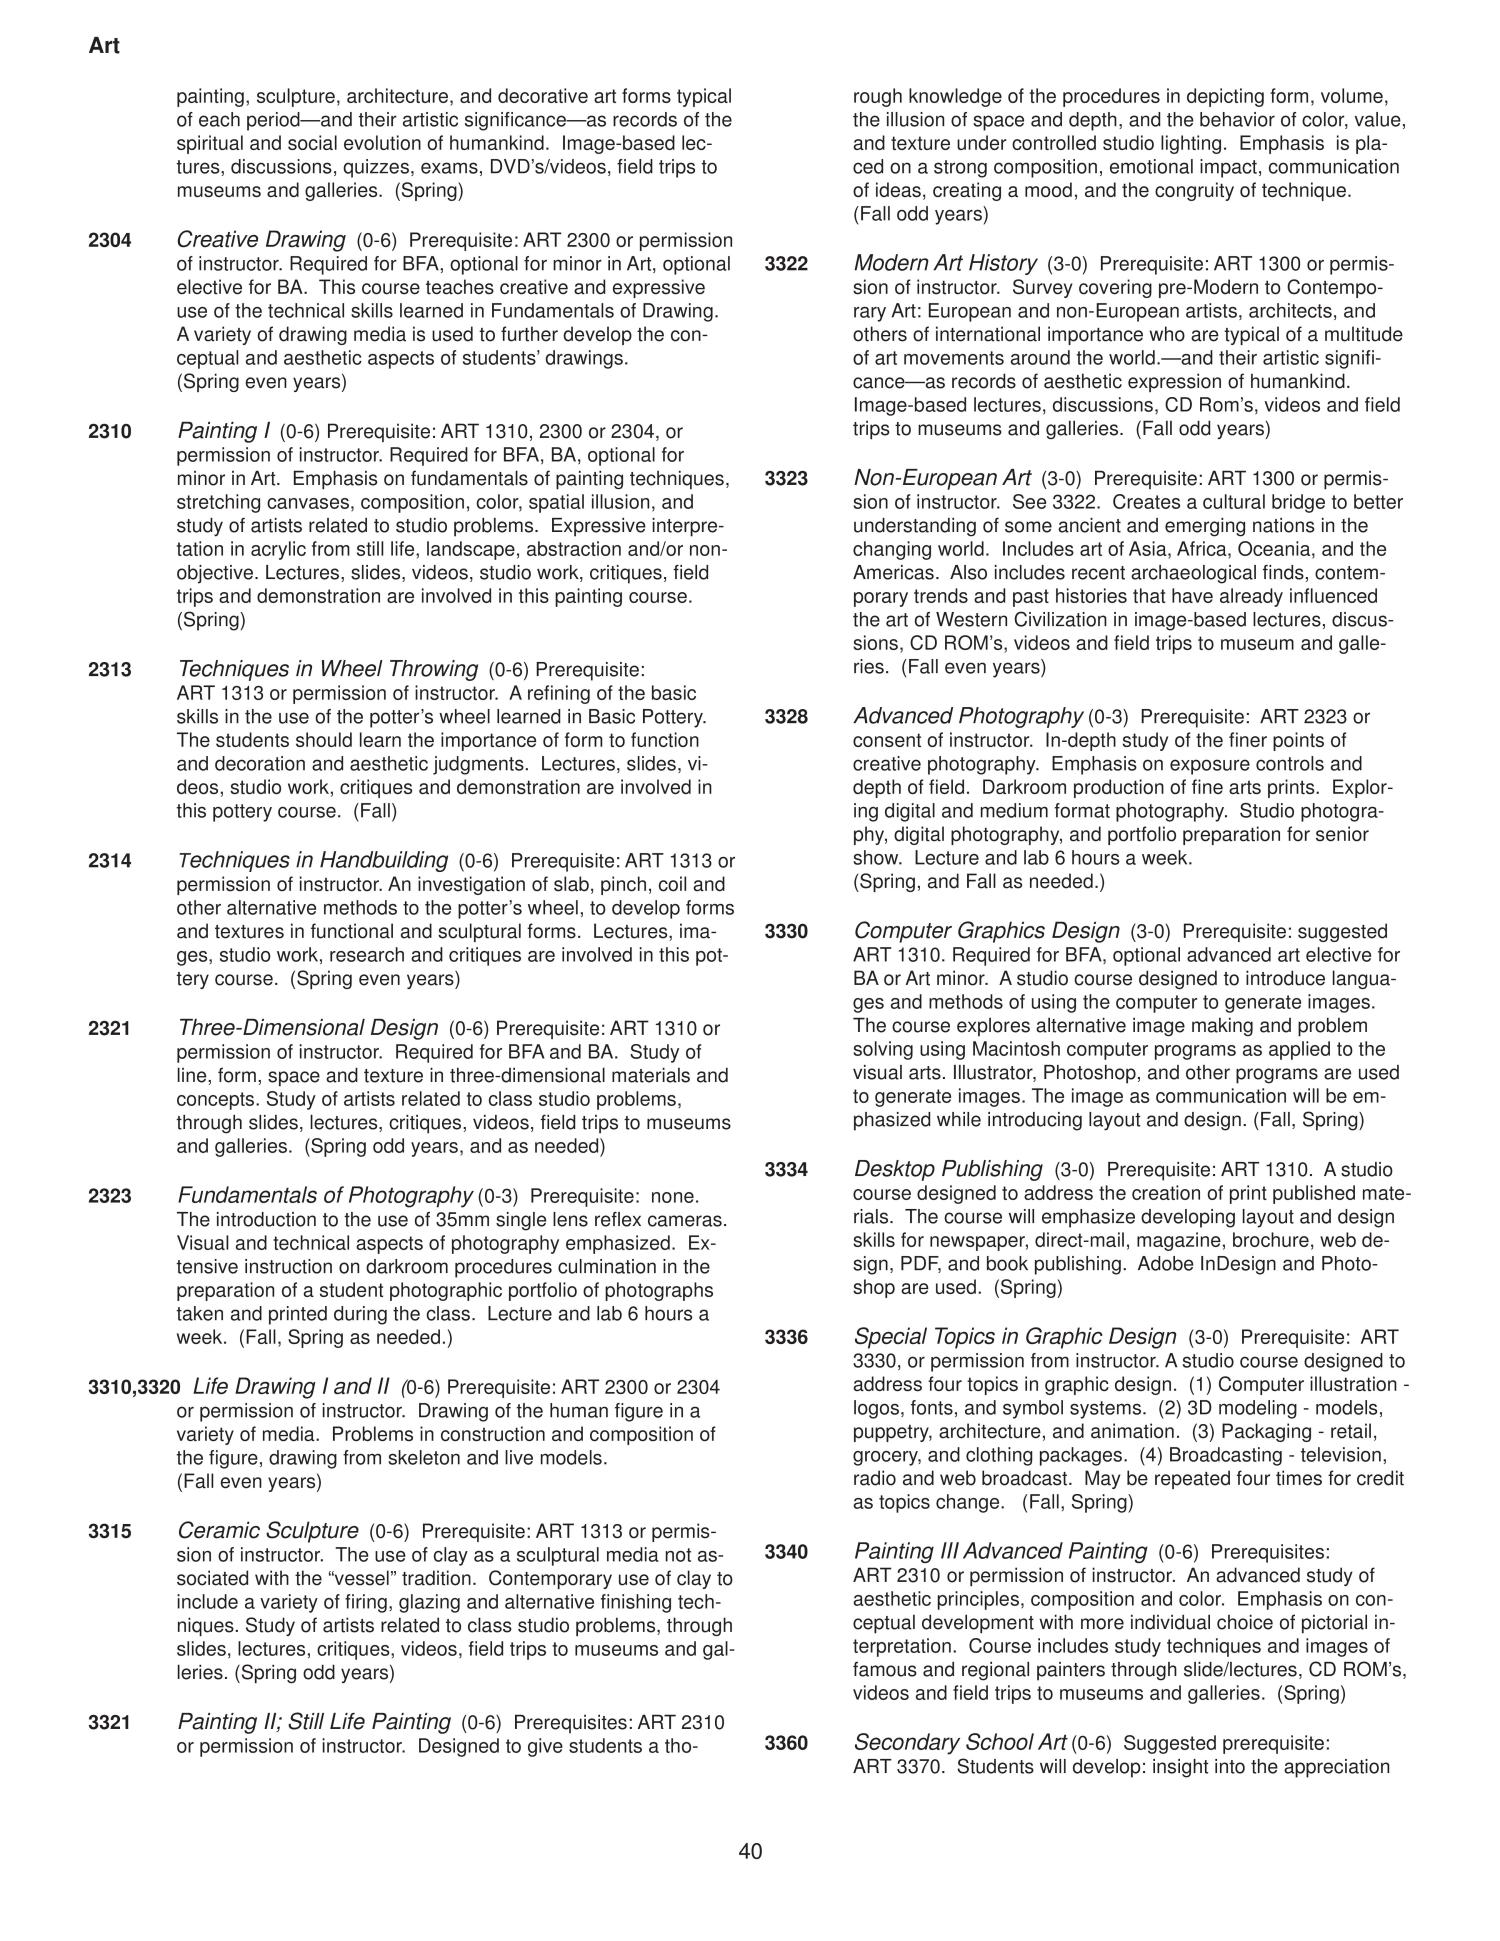 Bulletin of McMurry University, 2009-2010
                                                
                                                    40
                                                